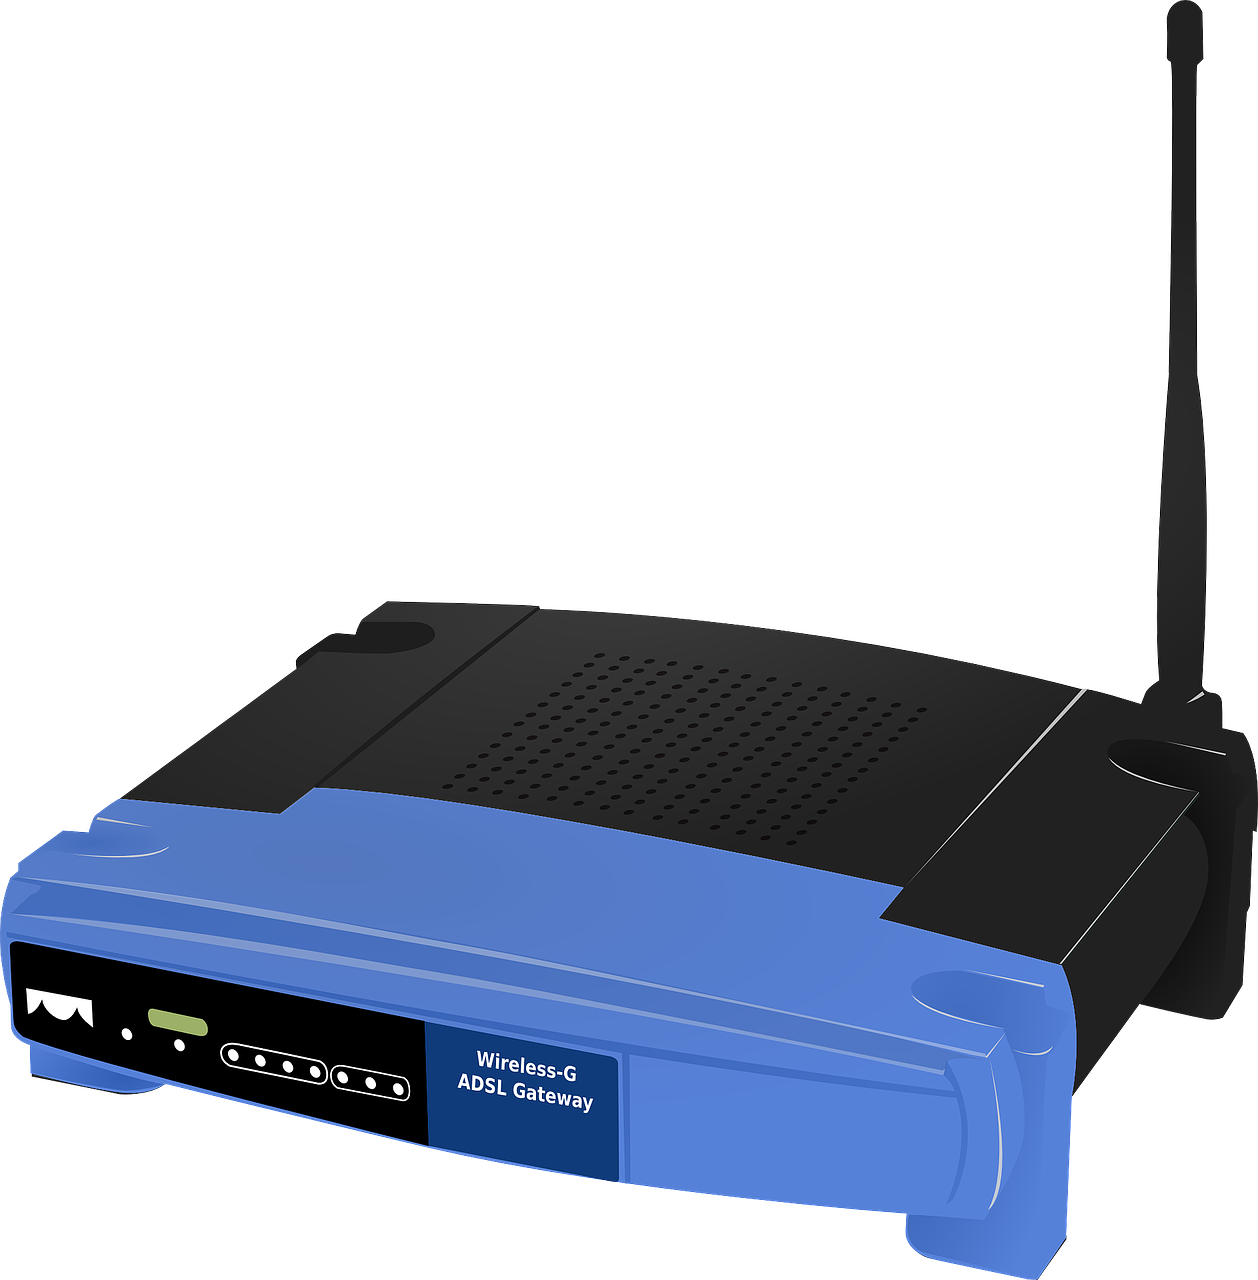 Wireless G A D S L Gateway Router